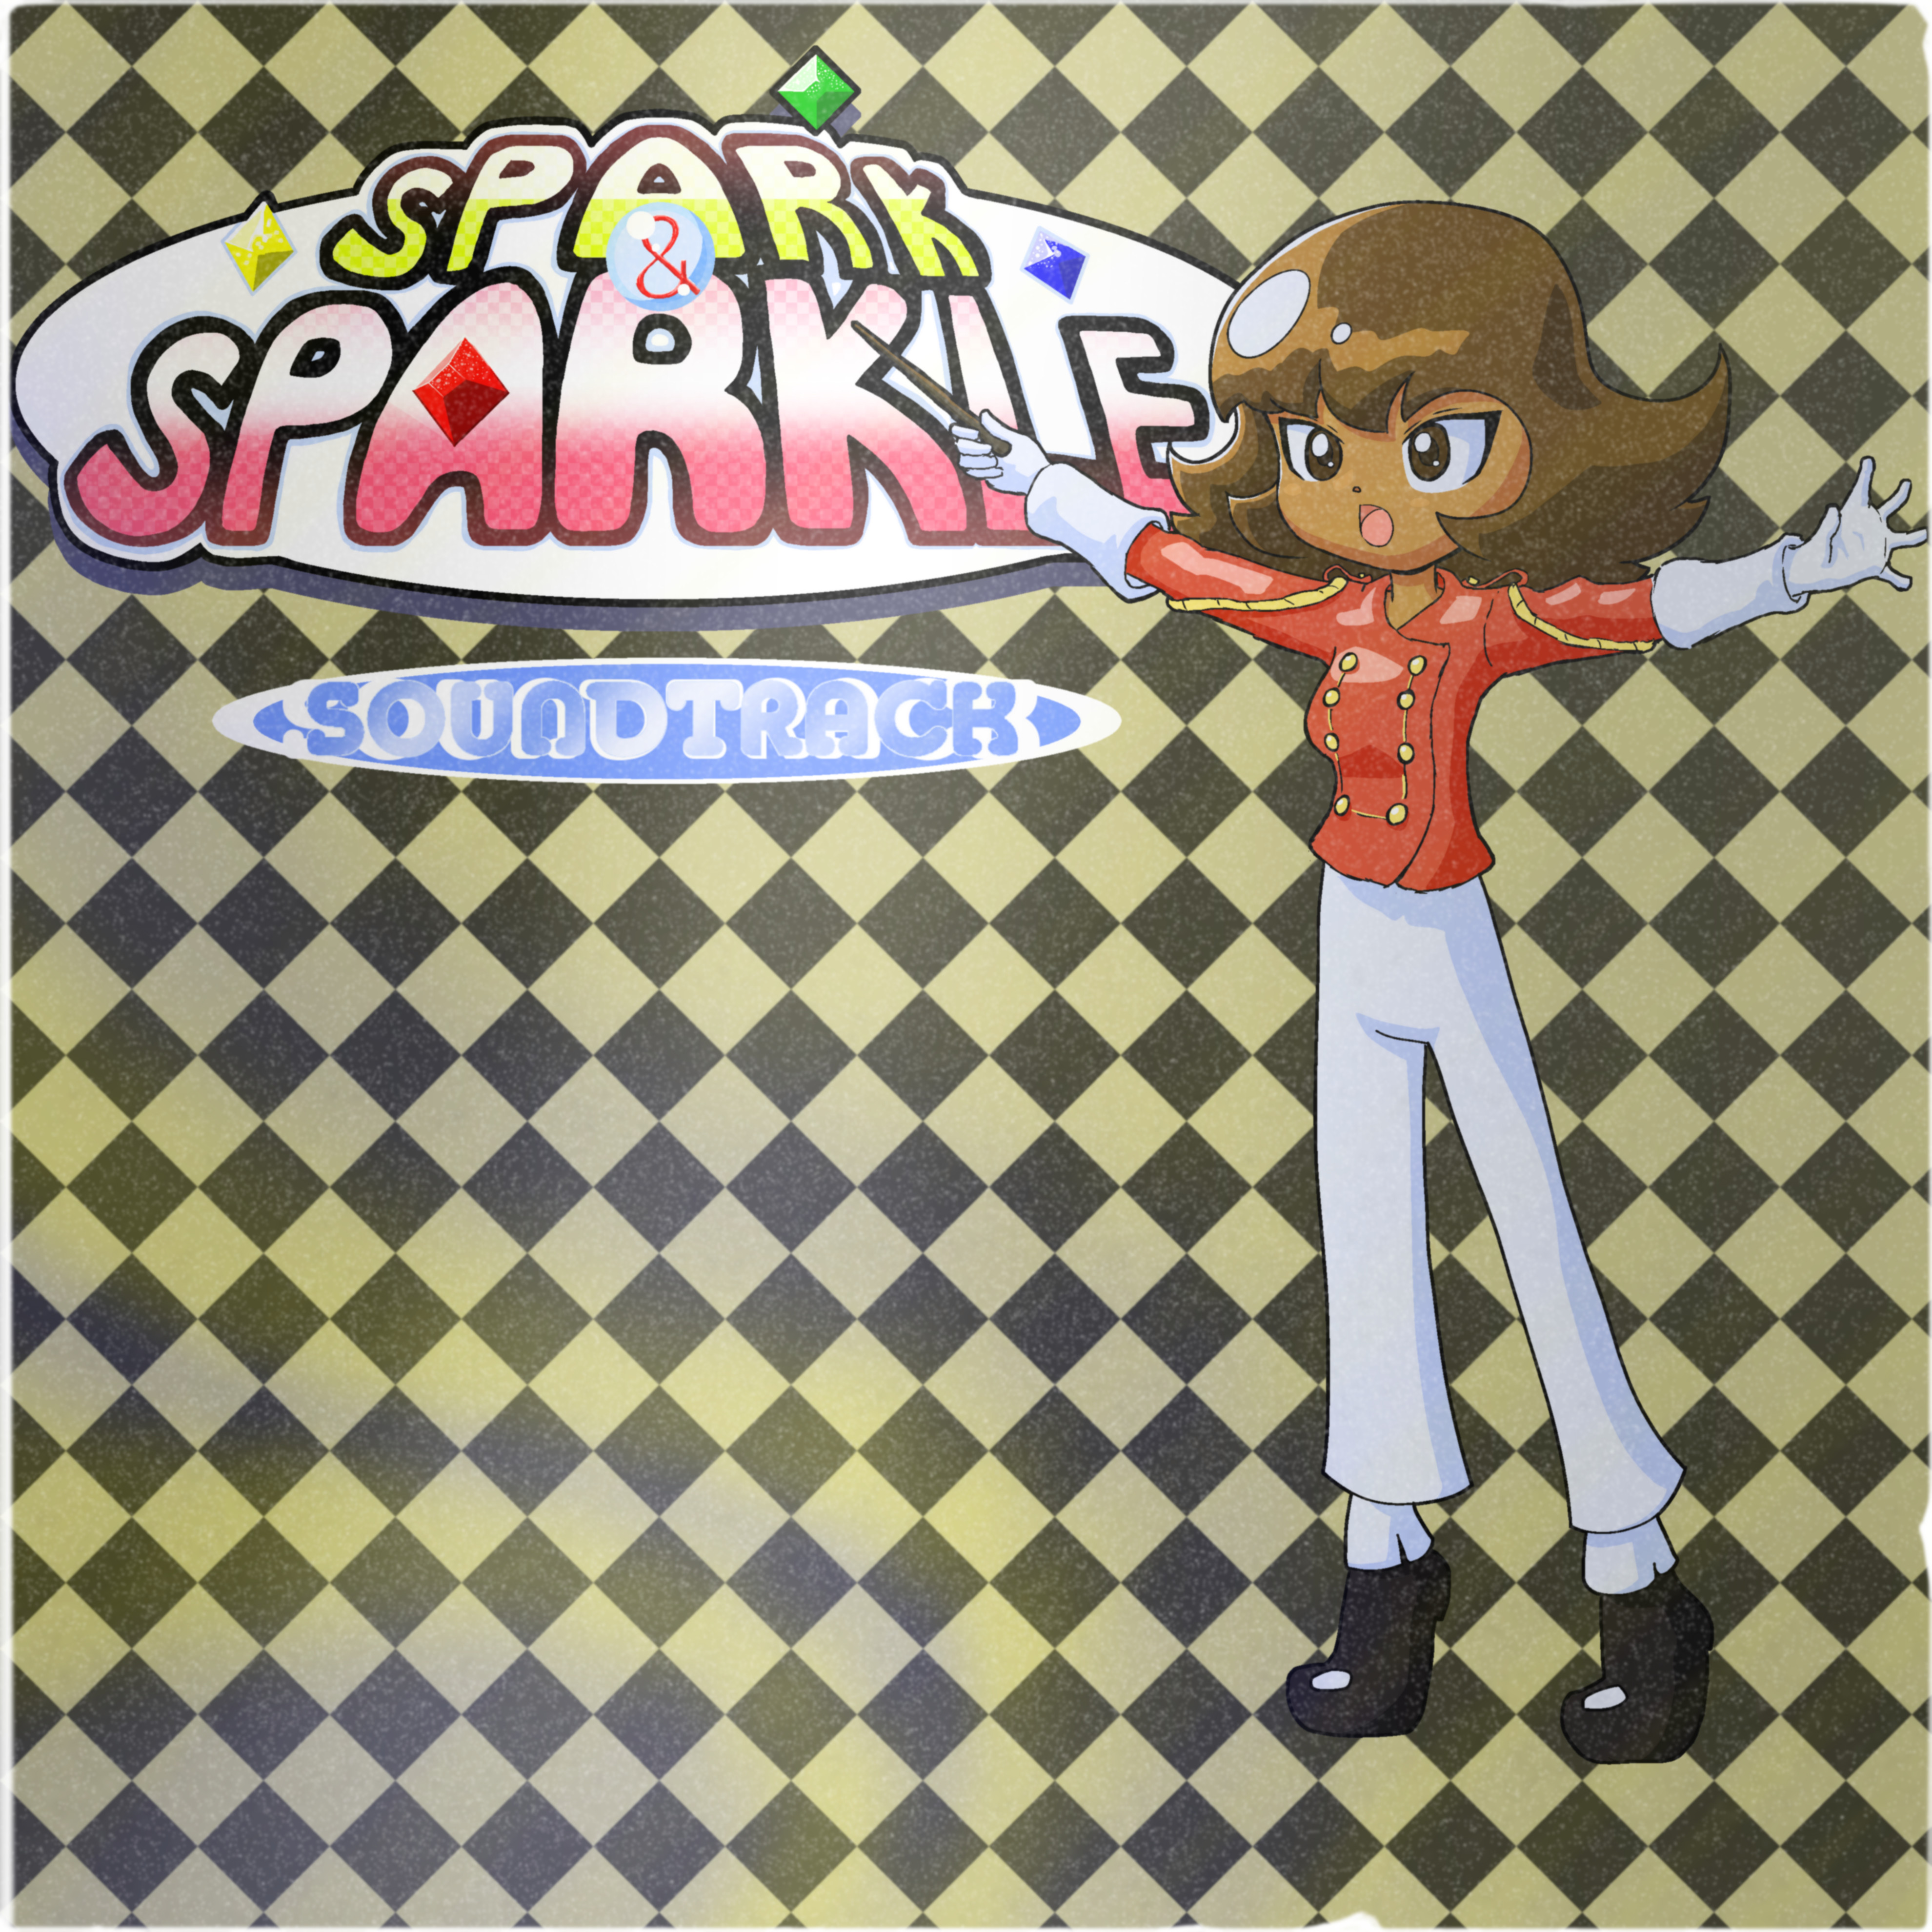 sparkle soundtrack 2012 download zip